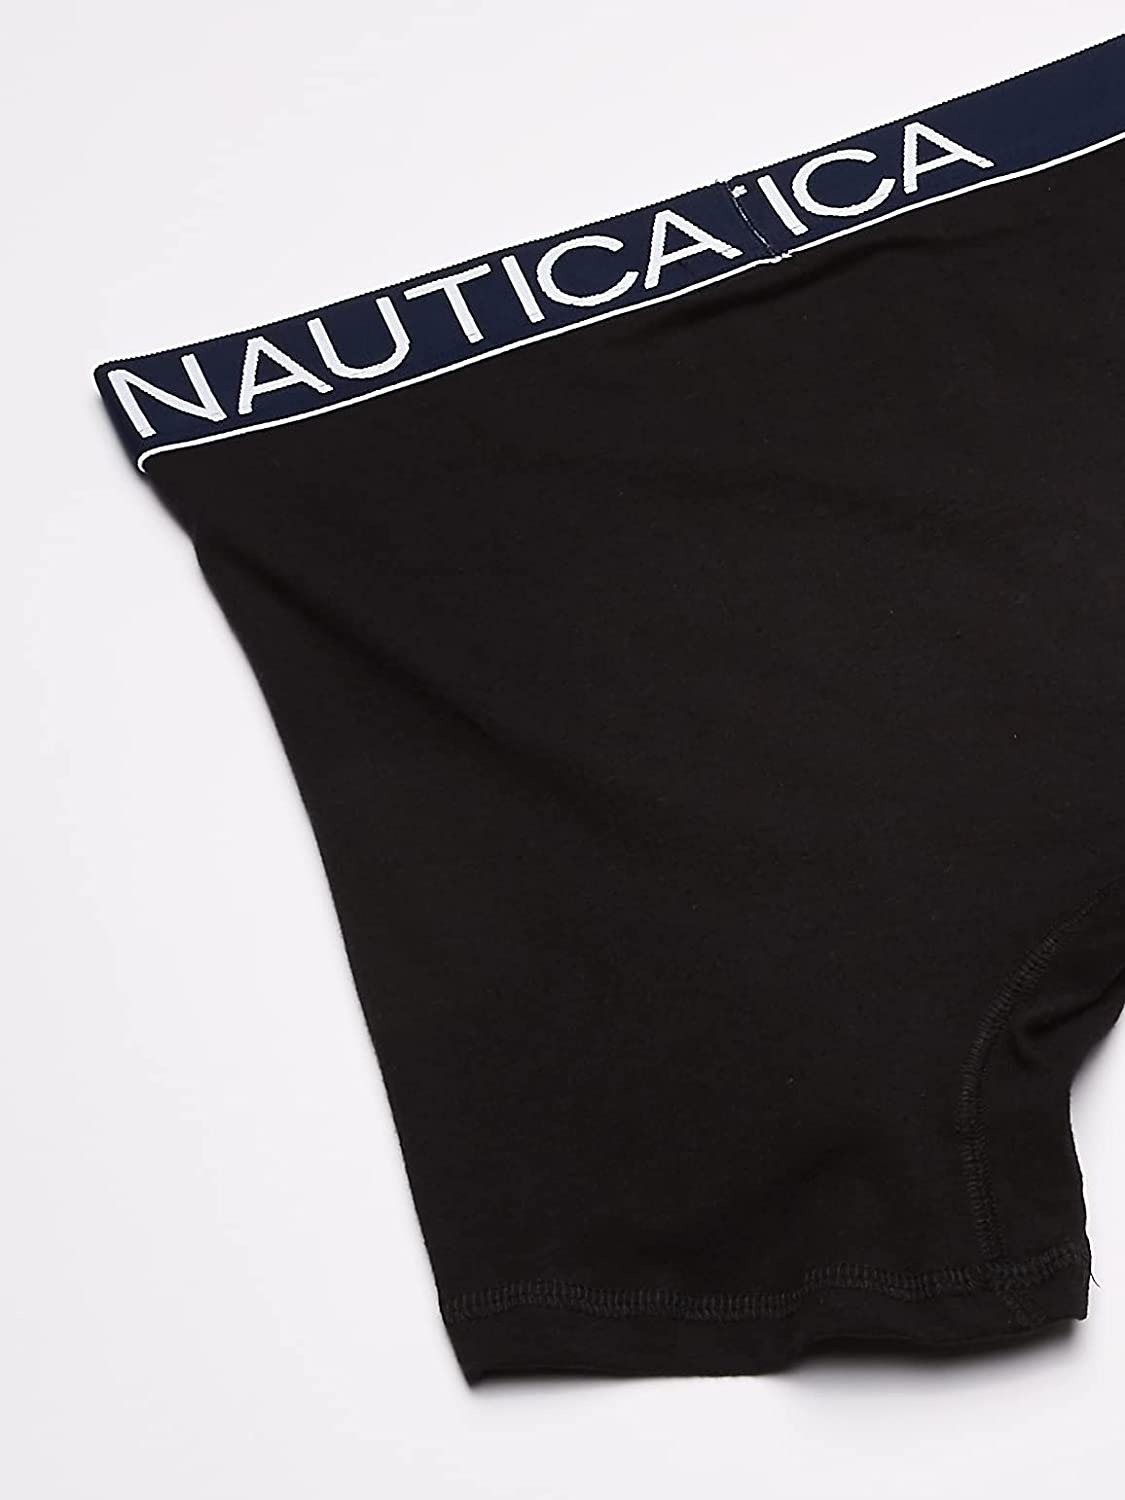 NAUTICA 3pc Men's Boxer Trunks Underwear - need1.com.au